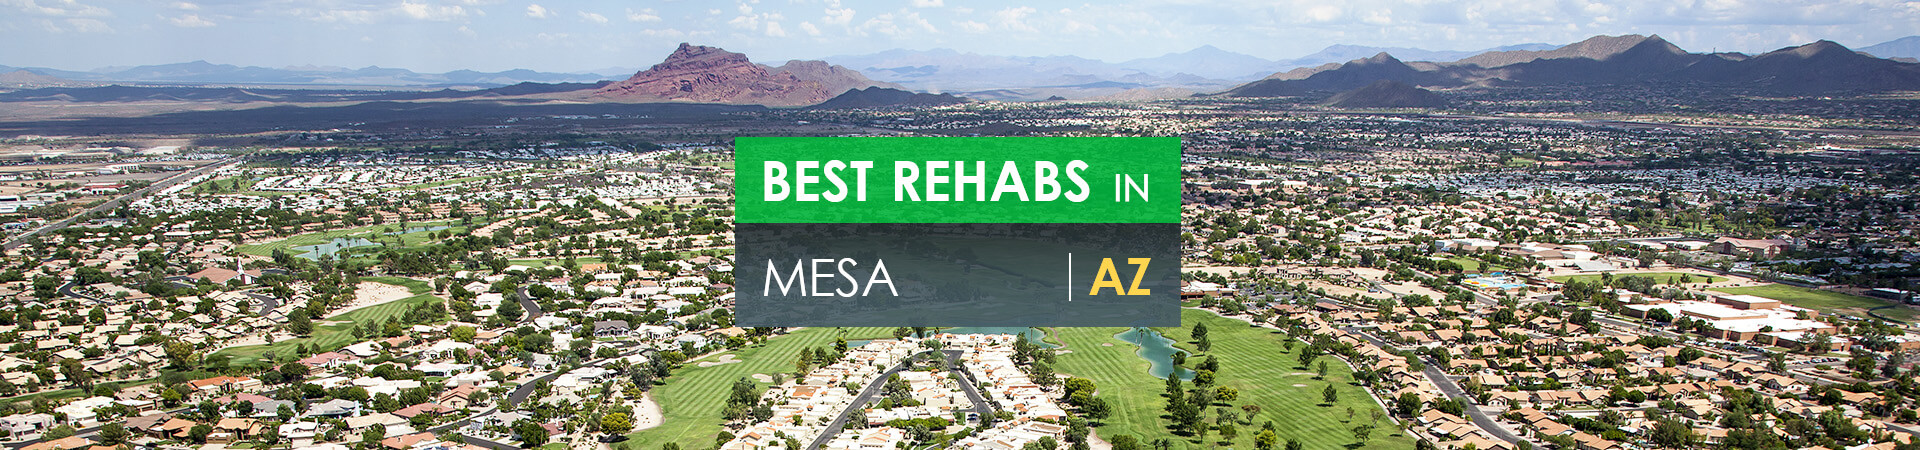 Best rehabs in Mesa, AZ